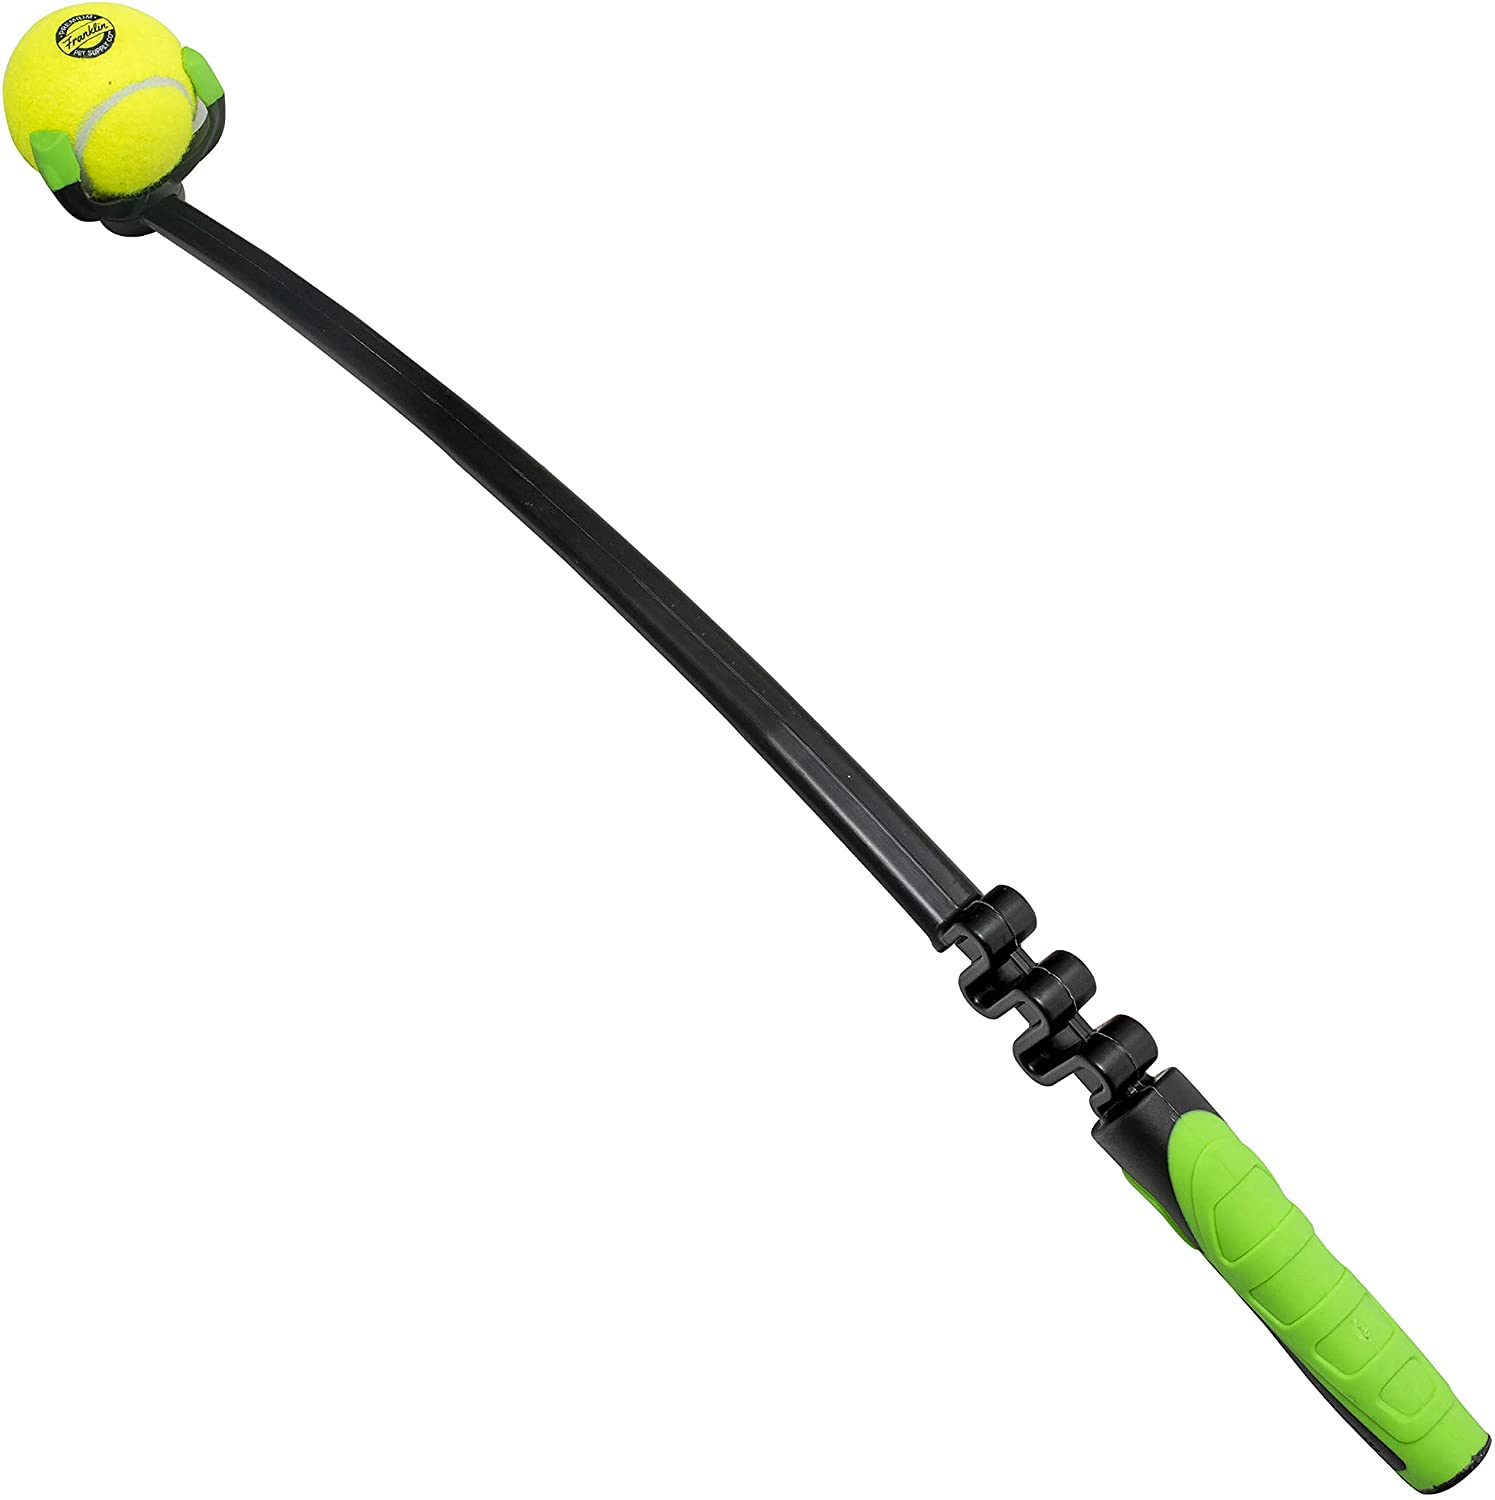 Manual Tennis Ball Thrower